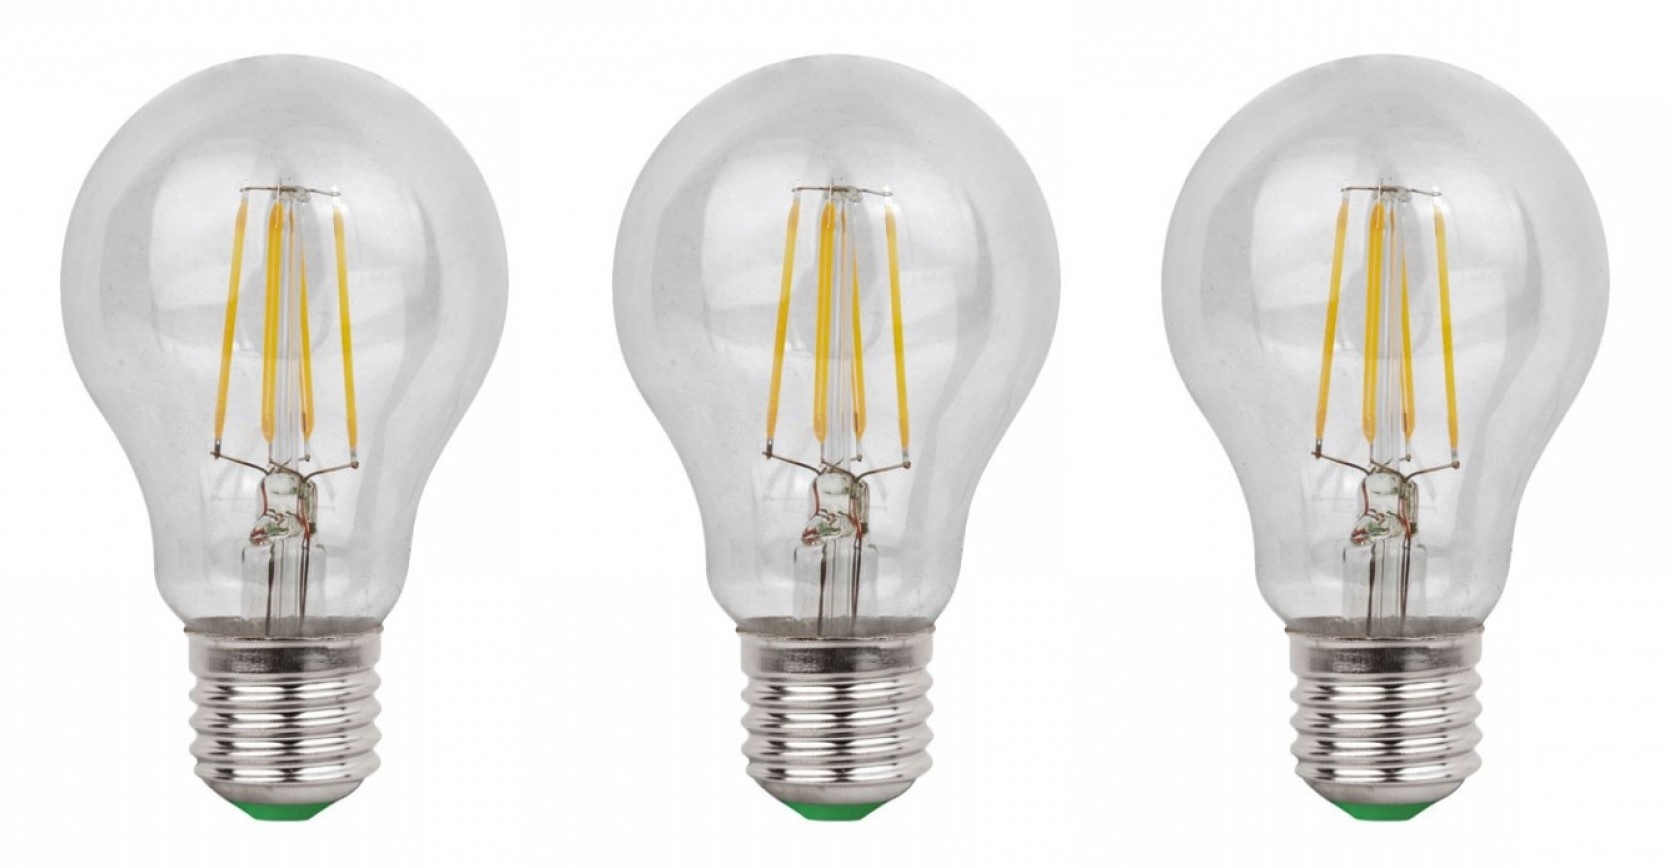 Elegantie vrijgesteld Ventileren E27 LED lamp 3 stuks | gloeilamp A60 | 8W=80W | warmwit filament 2700K